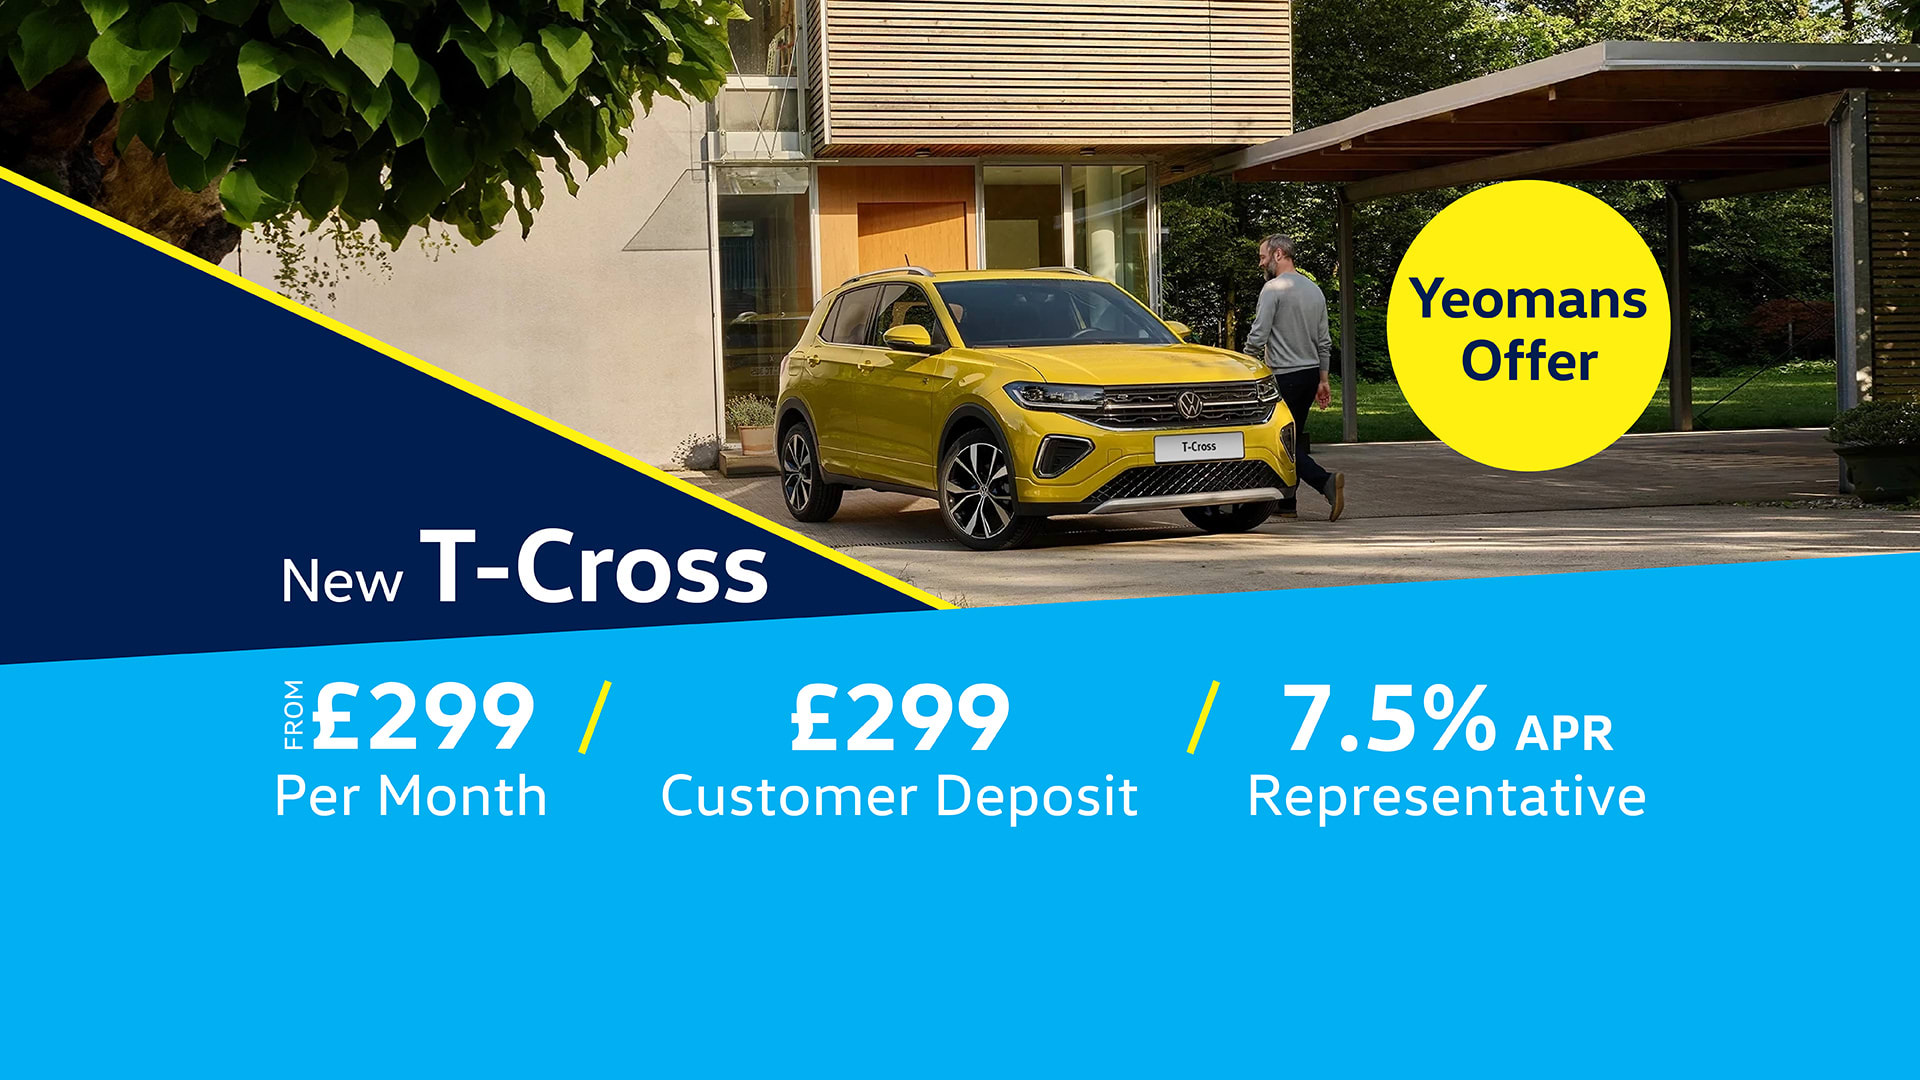 Yeomans Offer - New T-Cross